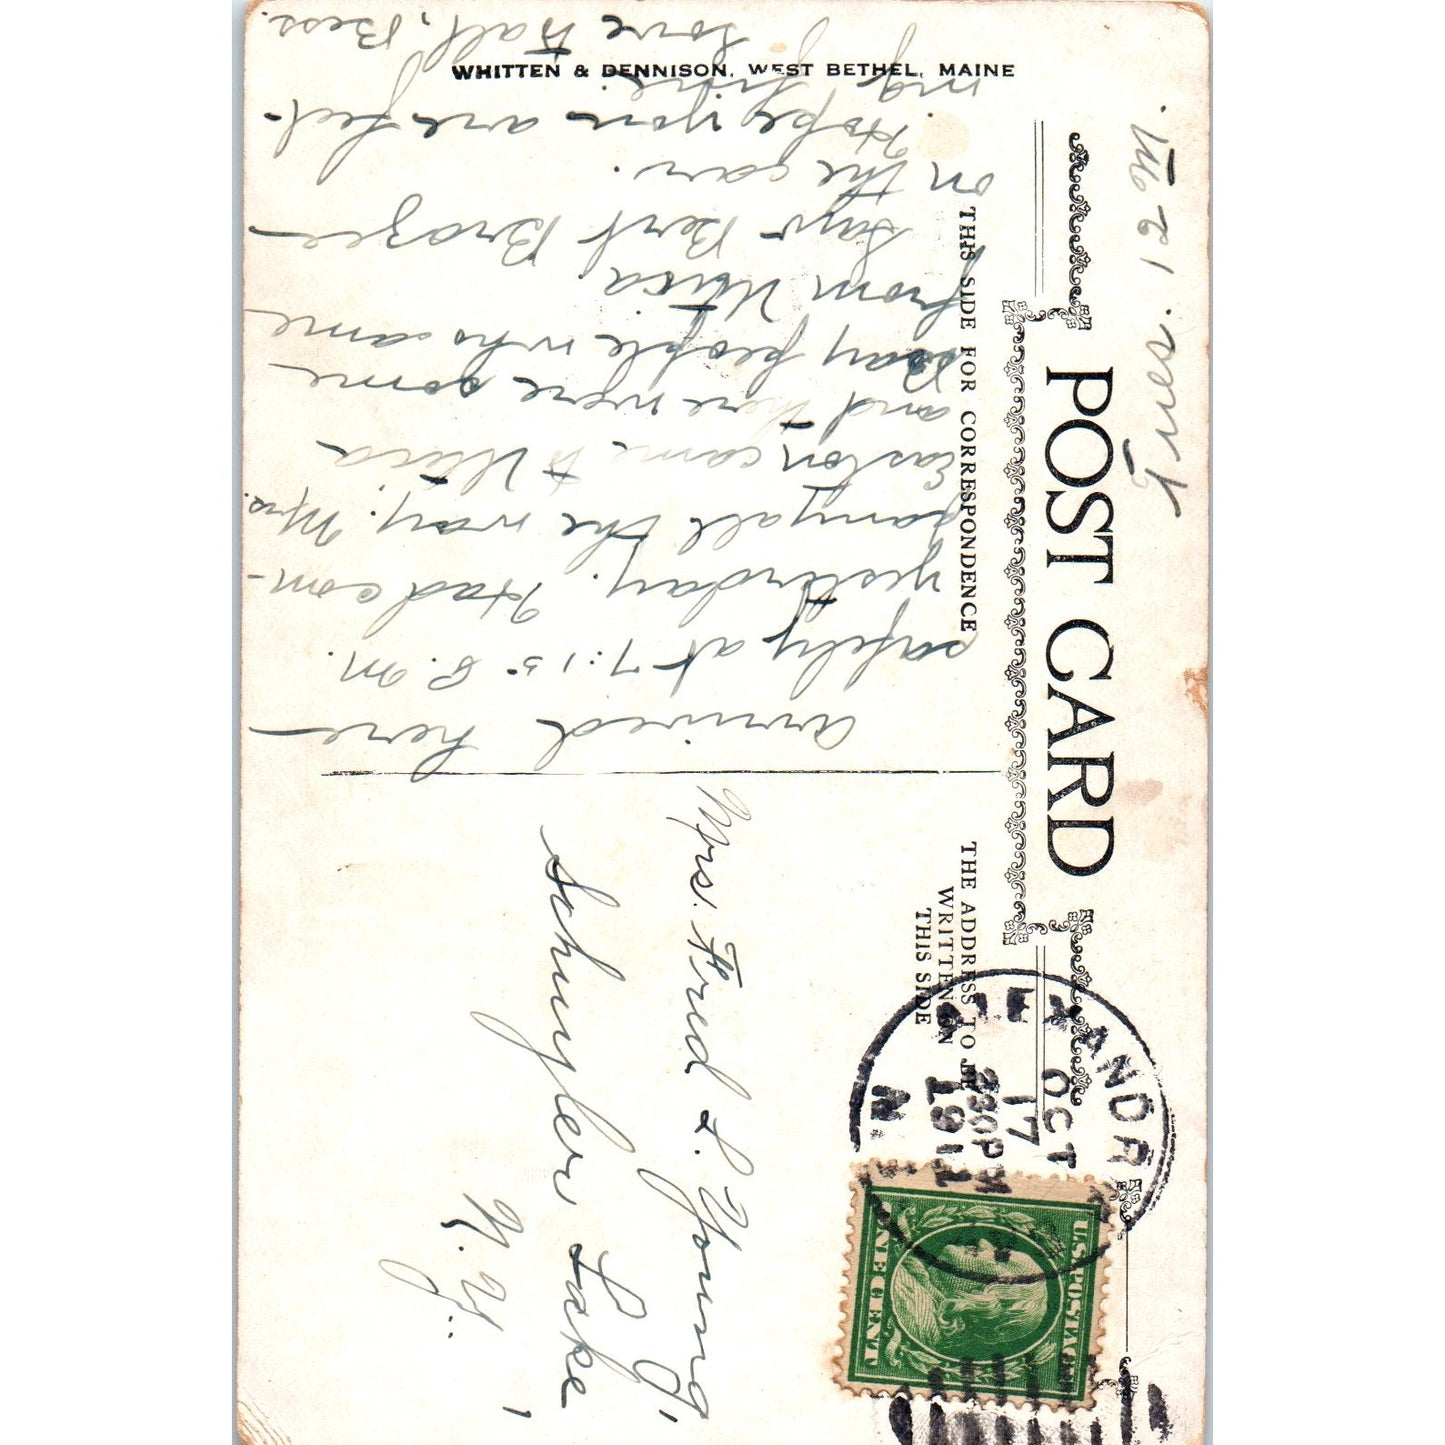 1911 This Town is Great Poem Whitten & Dennison West Bethel Antique Postcard PD8